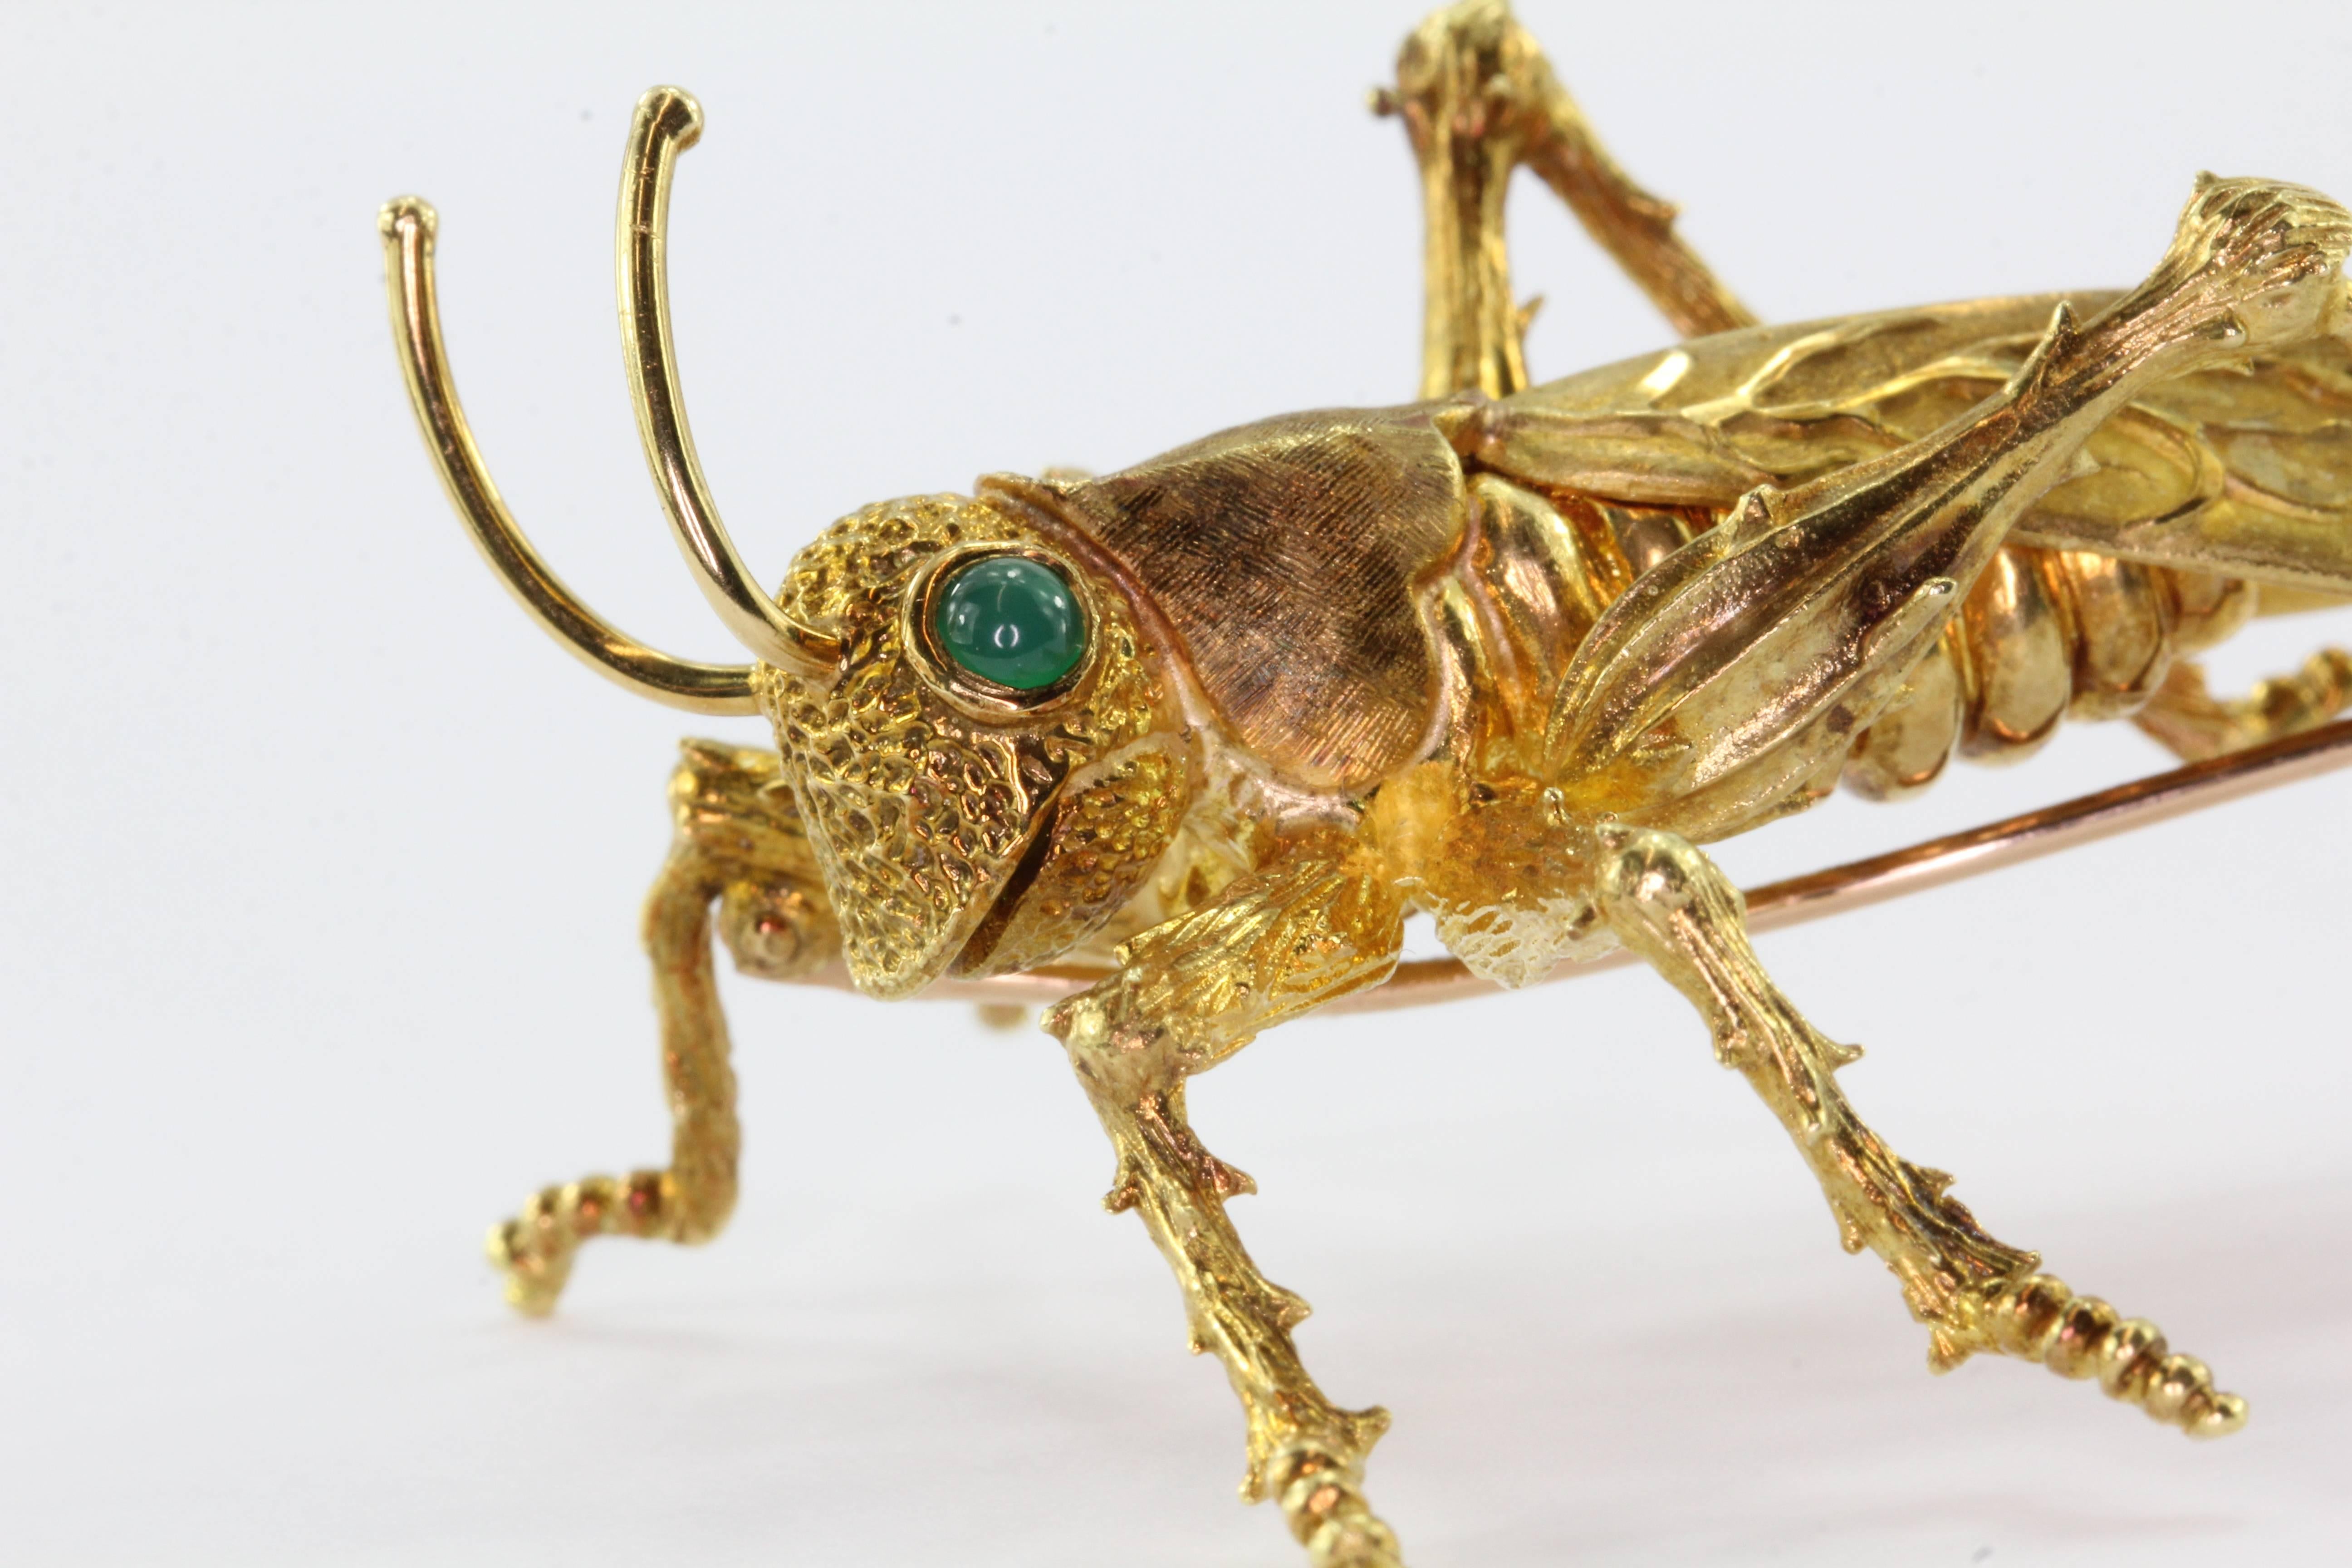  Kurt Wayne Emerald Gold Naturalistic Grasshopper Brooch Pin 2